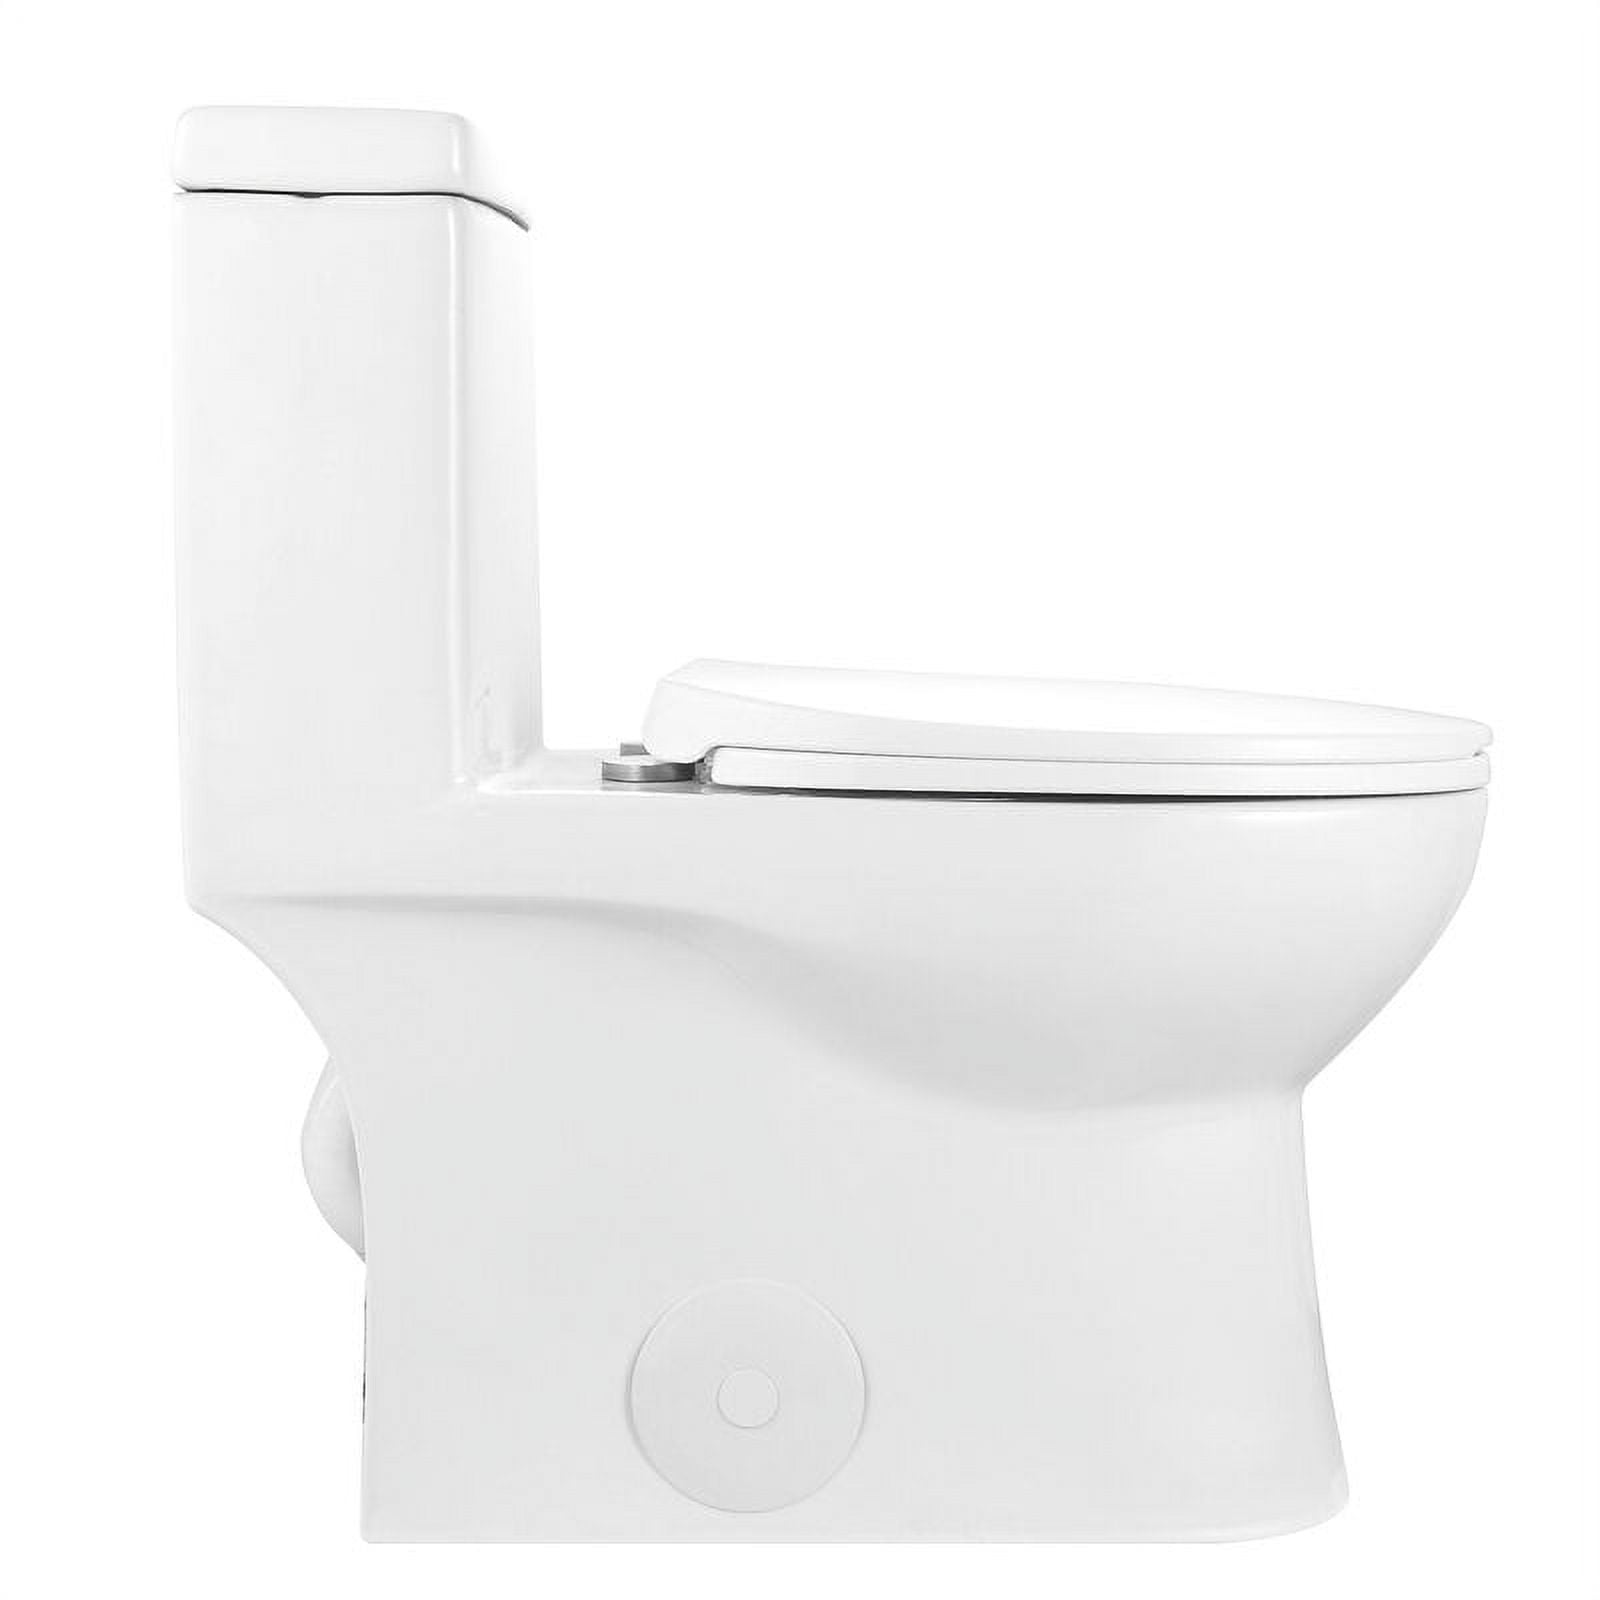 W888 One Piece Toilet Bowl *10 Years warranty on Mechanism* 150mm